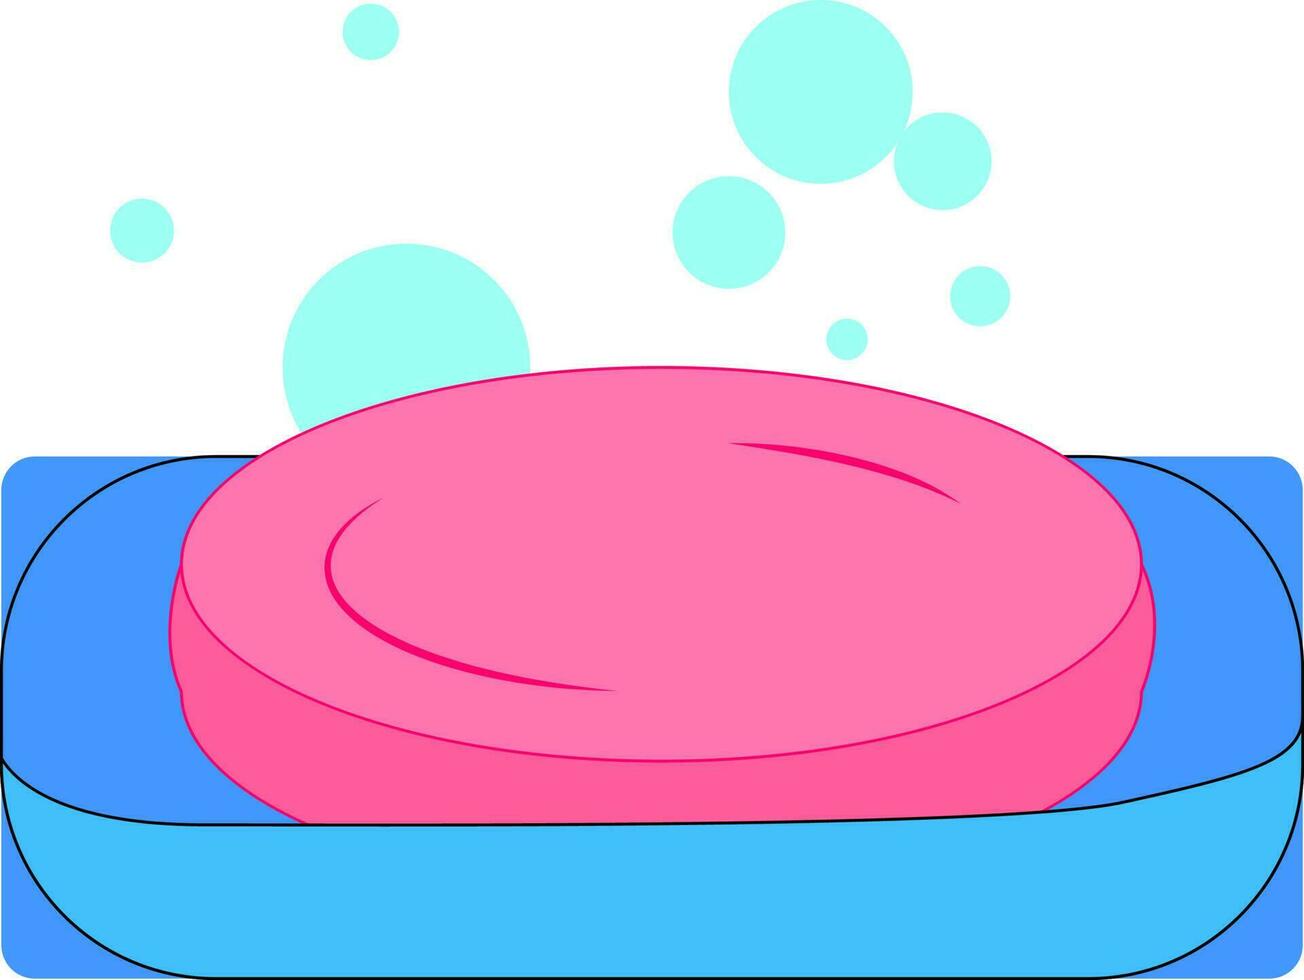 Pink soap, illustration, vector on white background.